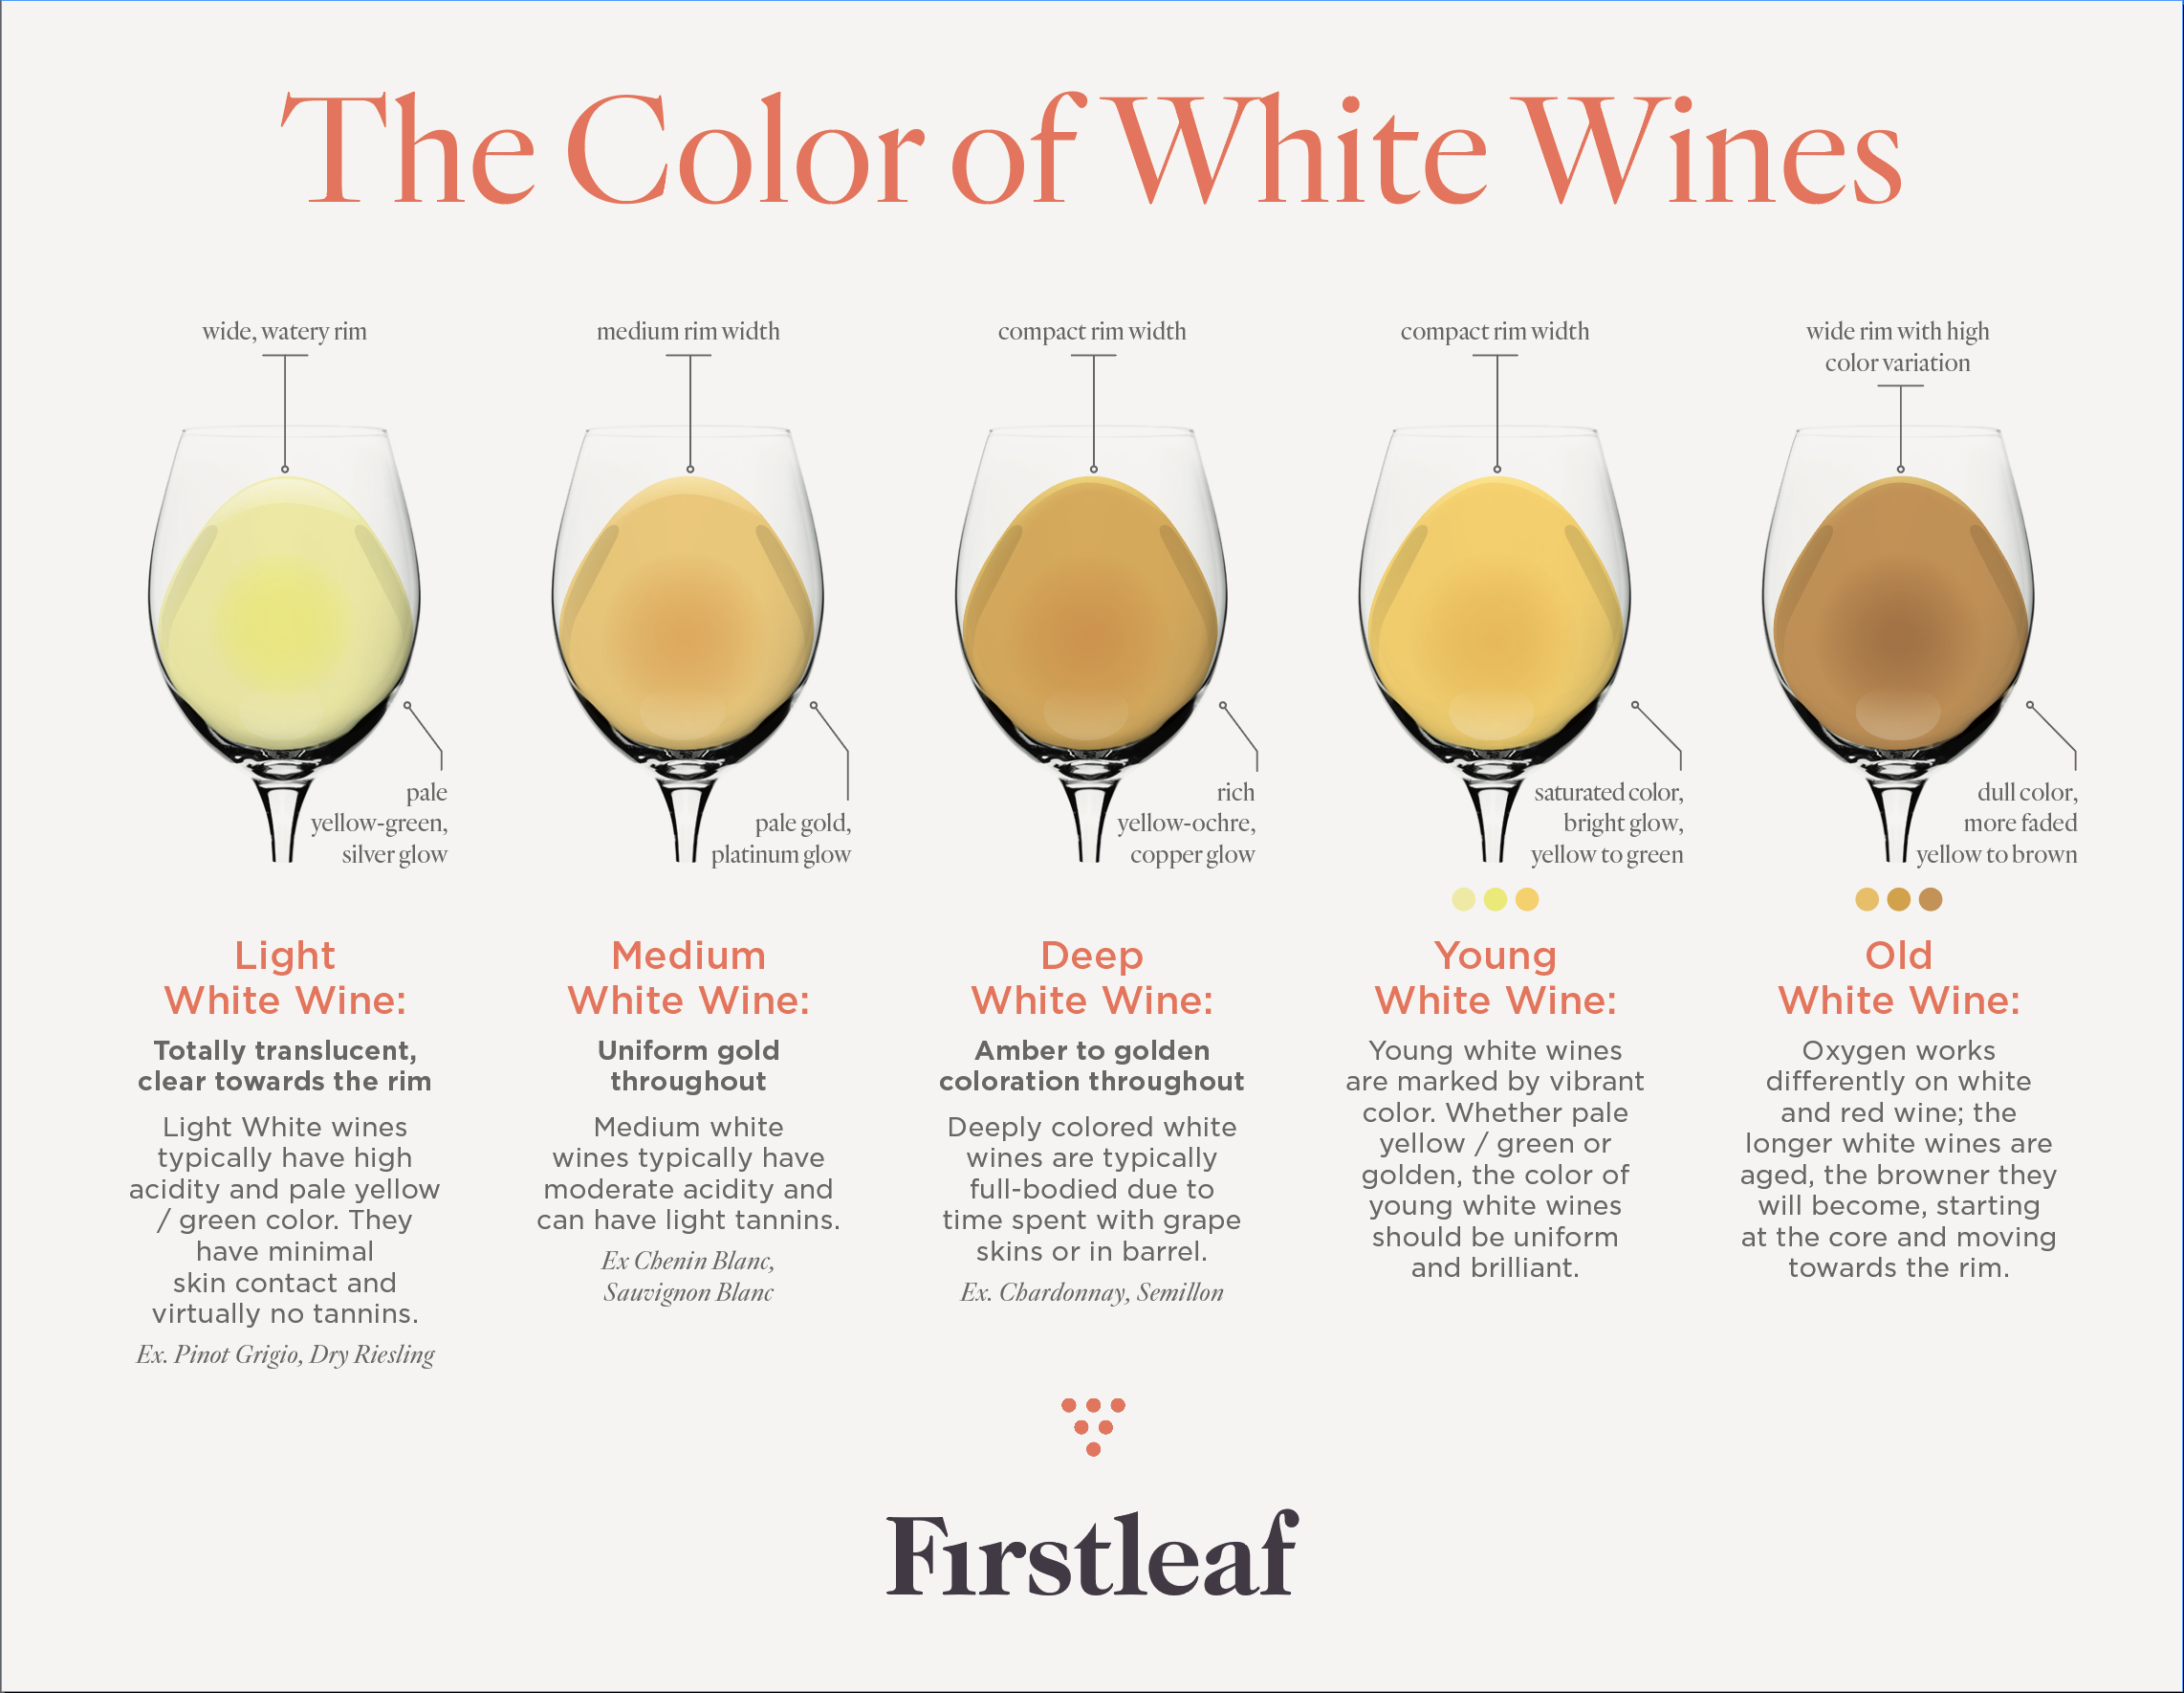 White Wine Color Chart